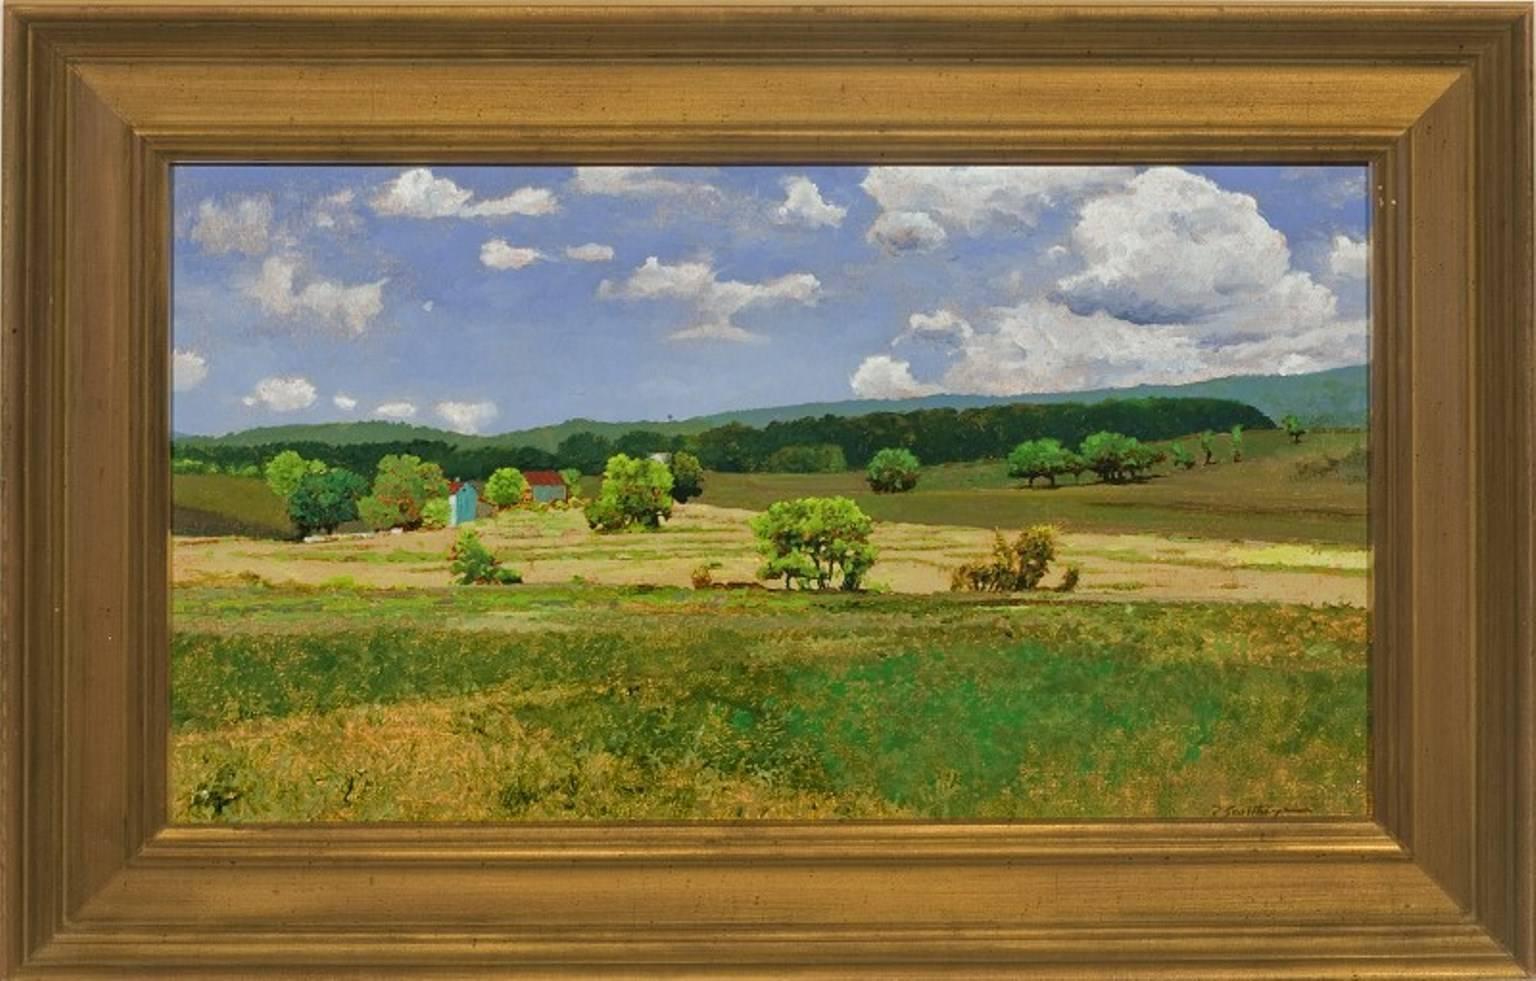 Peter Sculthorpe Landscape Painting - "Near Paris, Virginia"